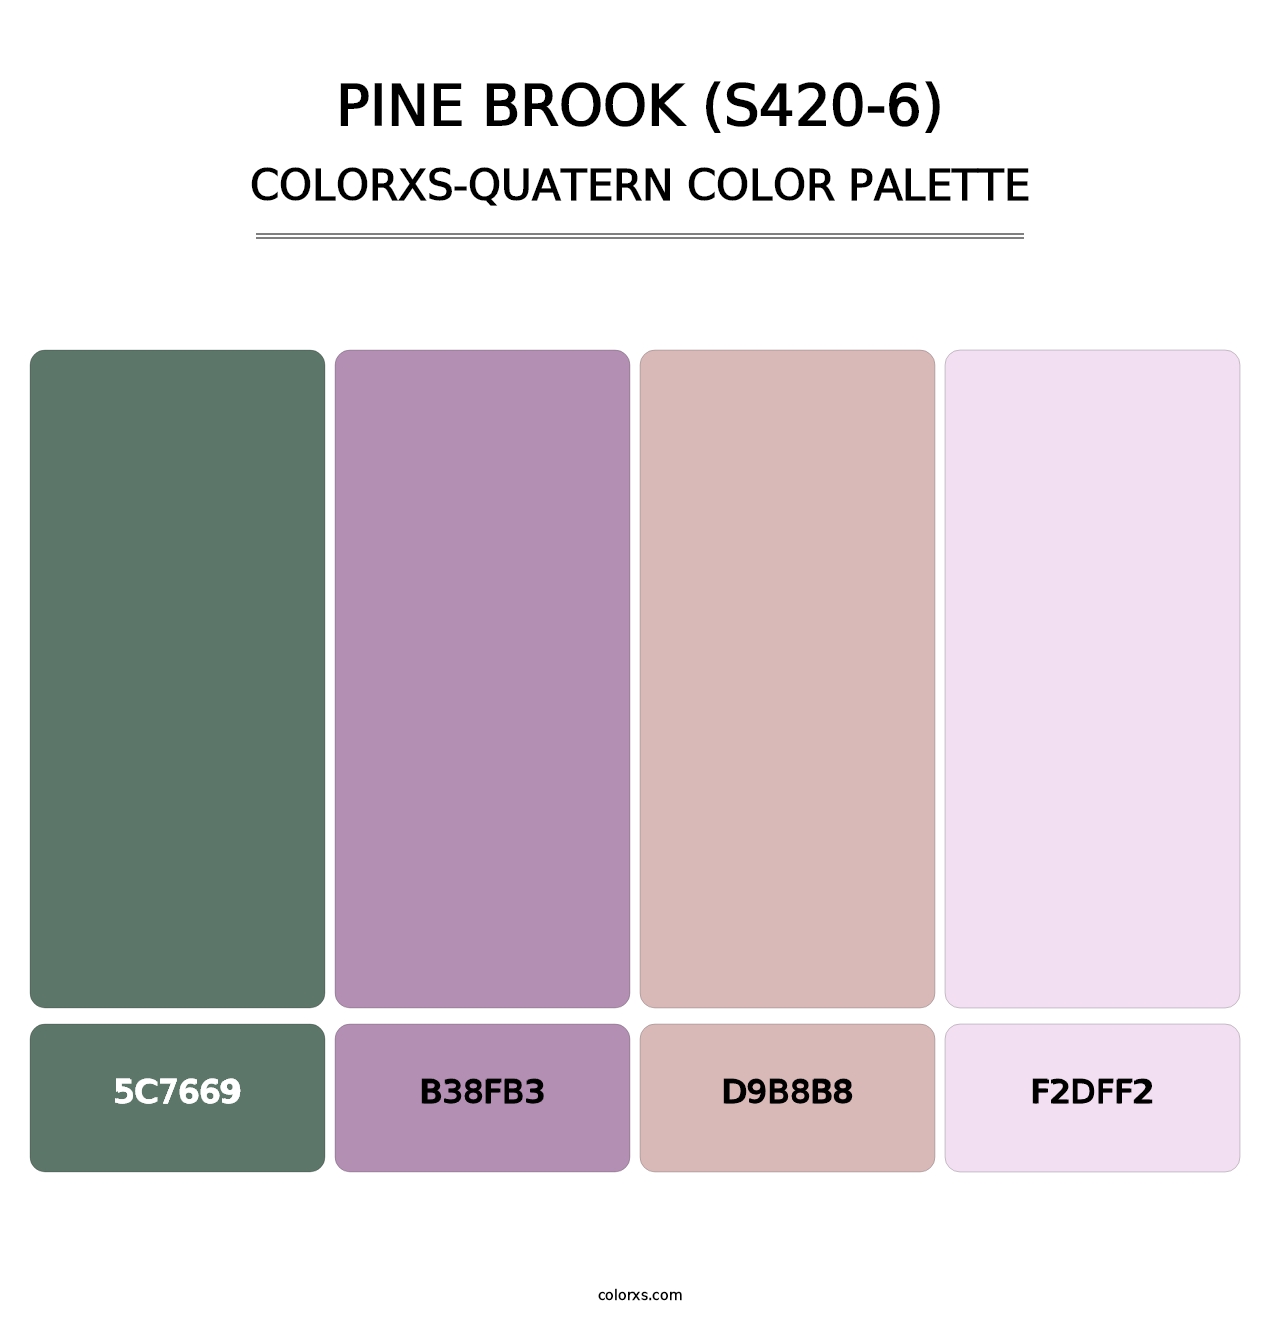 Pine Brook (S420-6) - Colorxs Quatern Palette